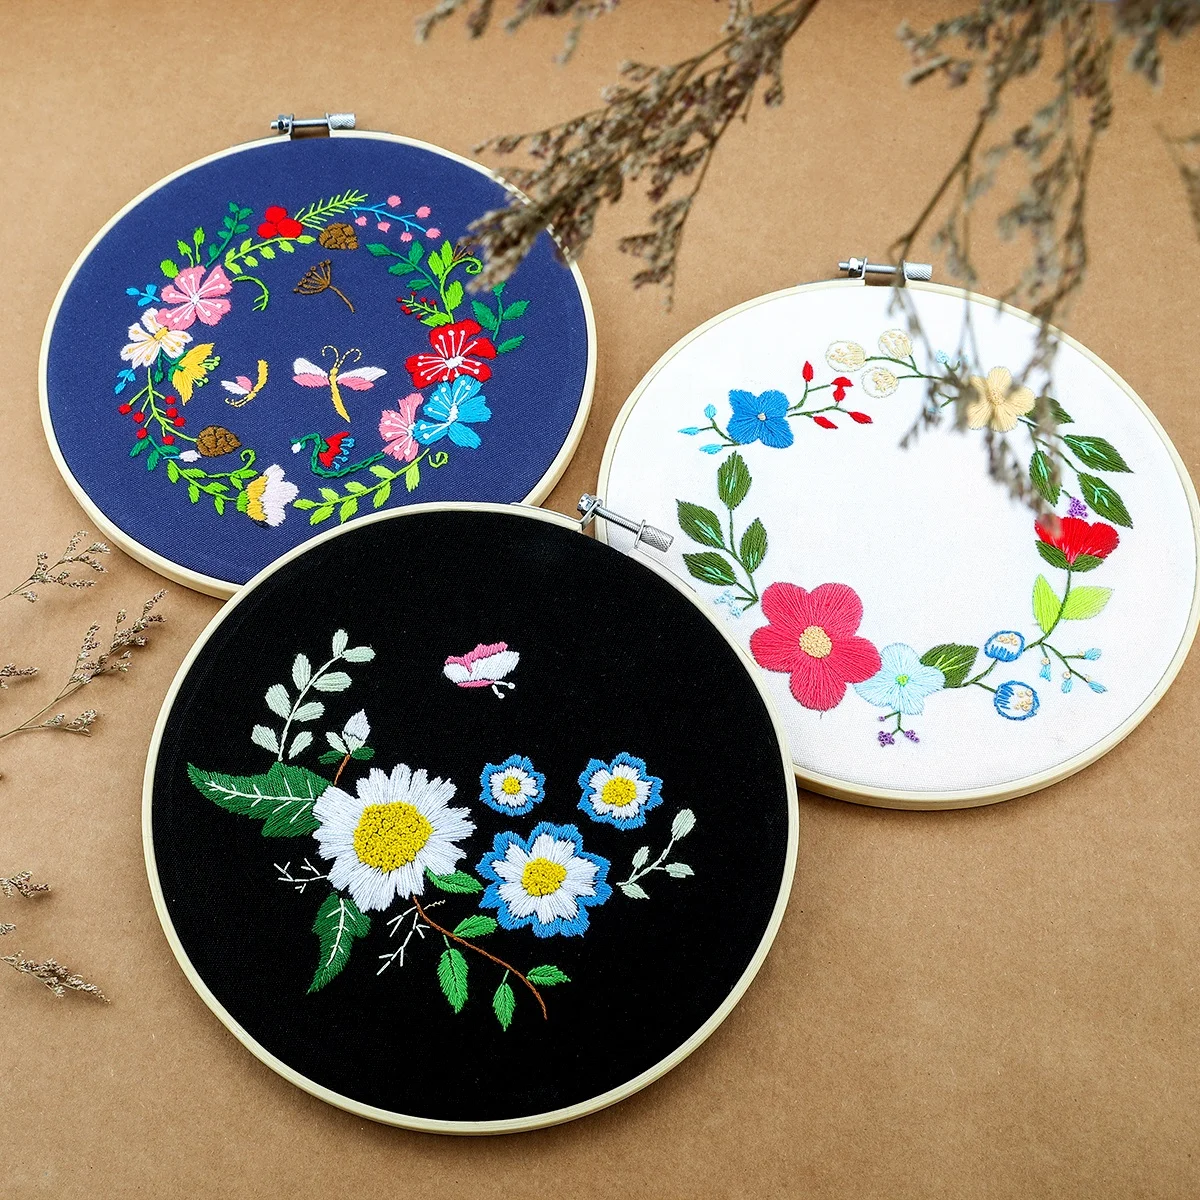 
hot sale 3pcs cross stitch set embroidery starter kit with pattern  (1600054764758)